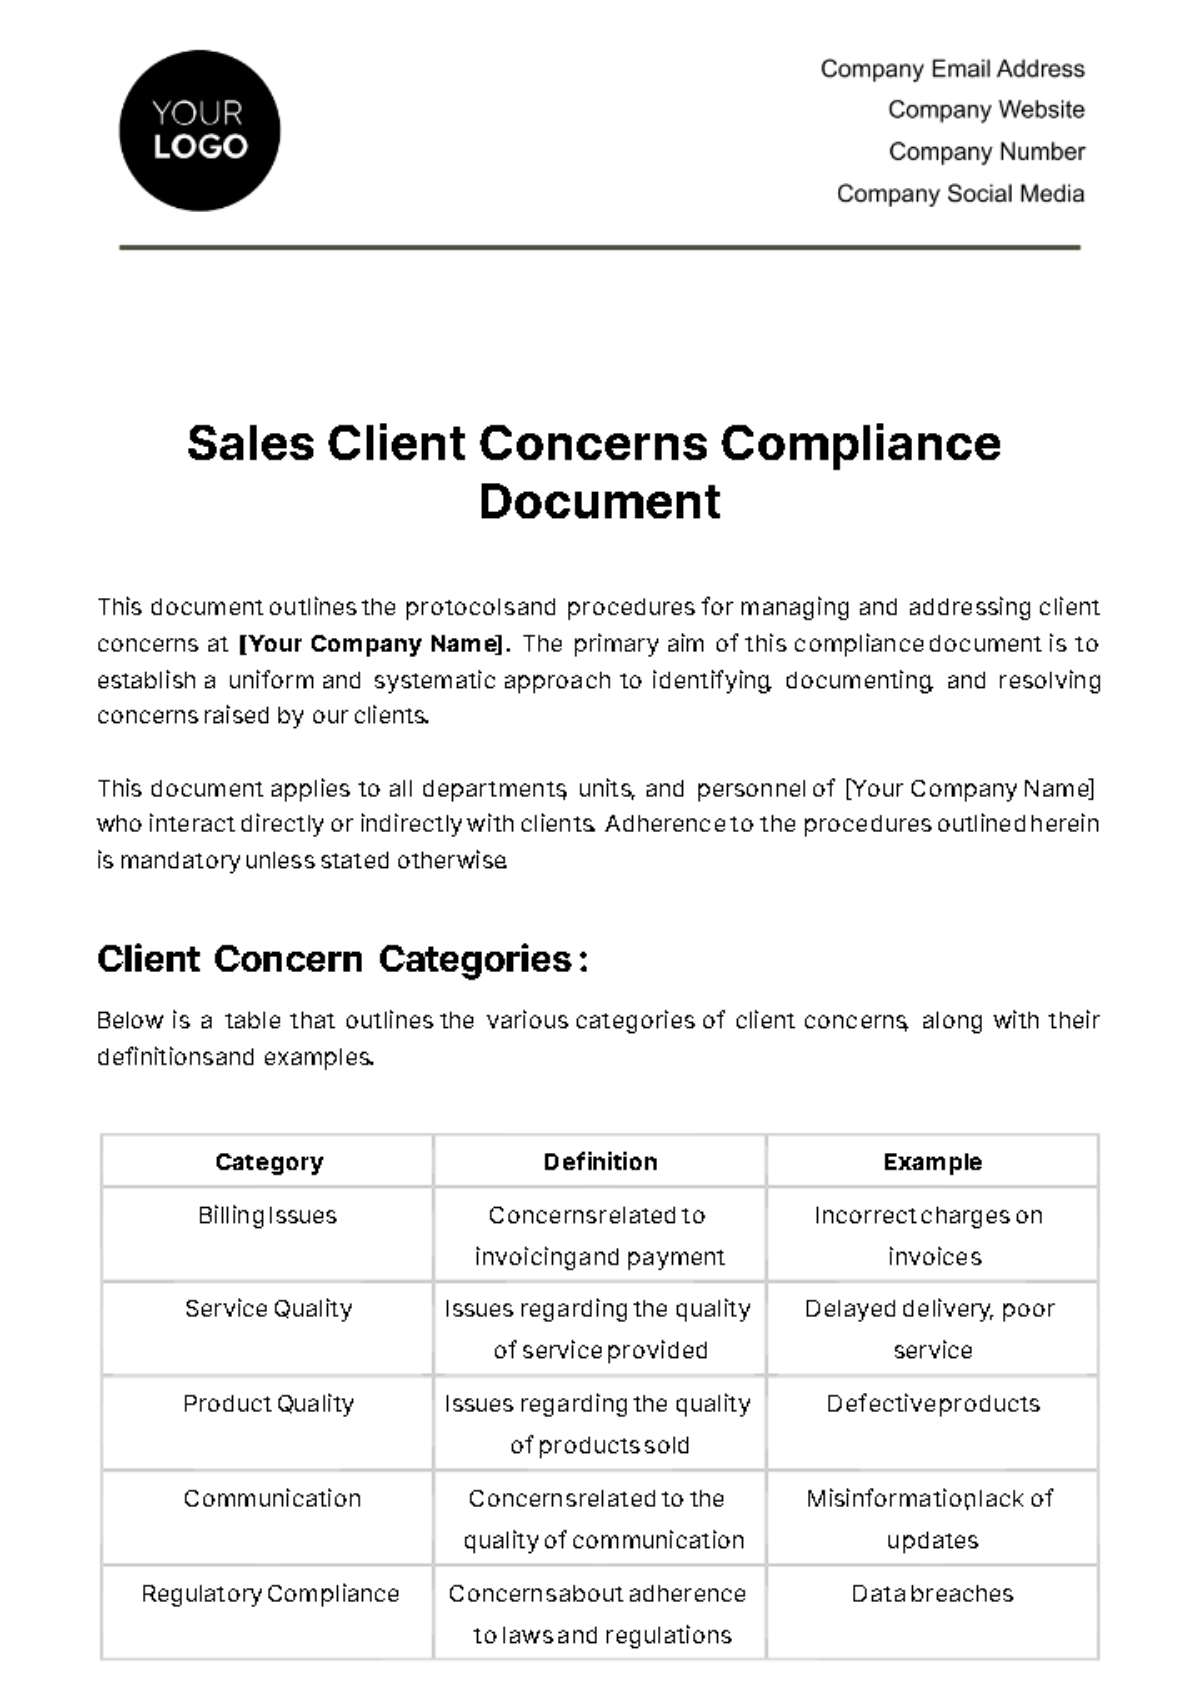 Free Sales Client Concerns Compliance Document Template